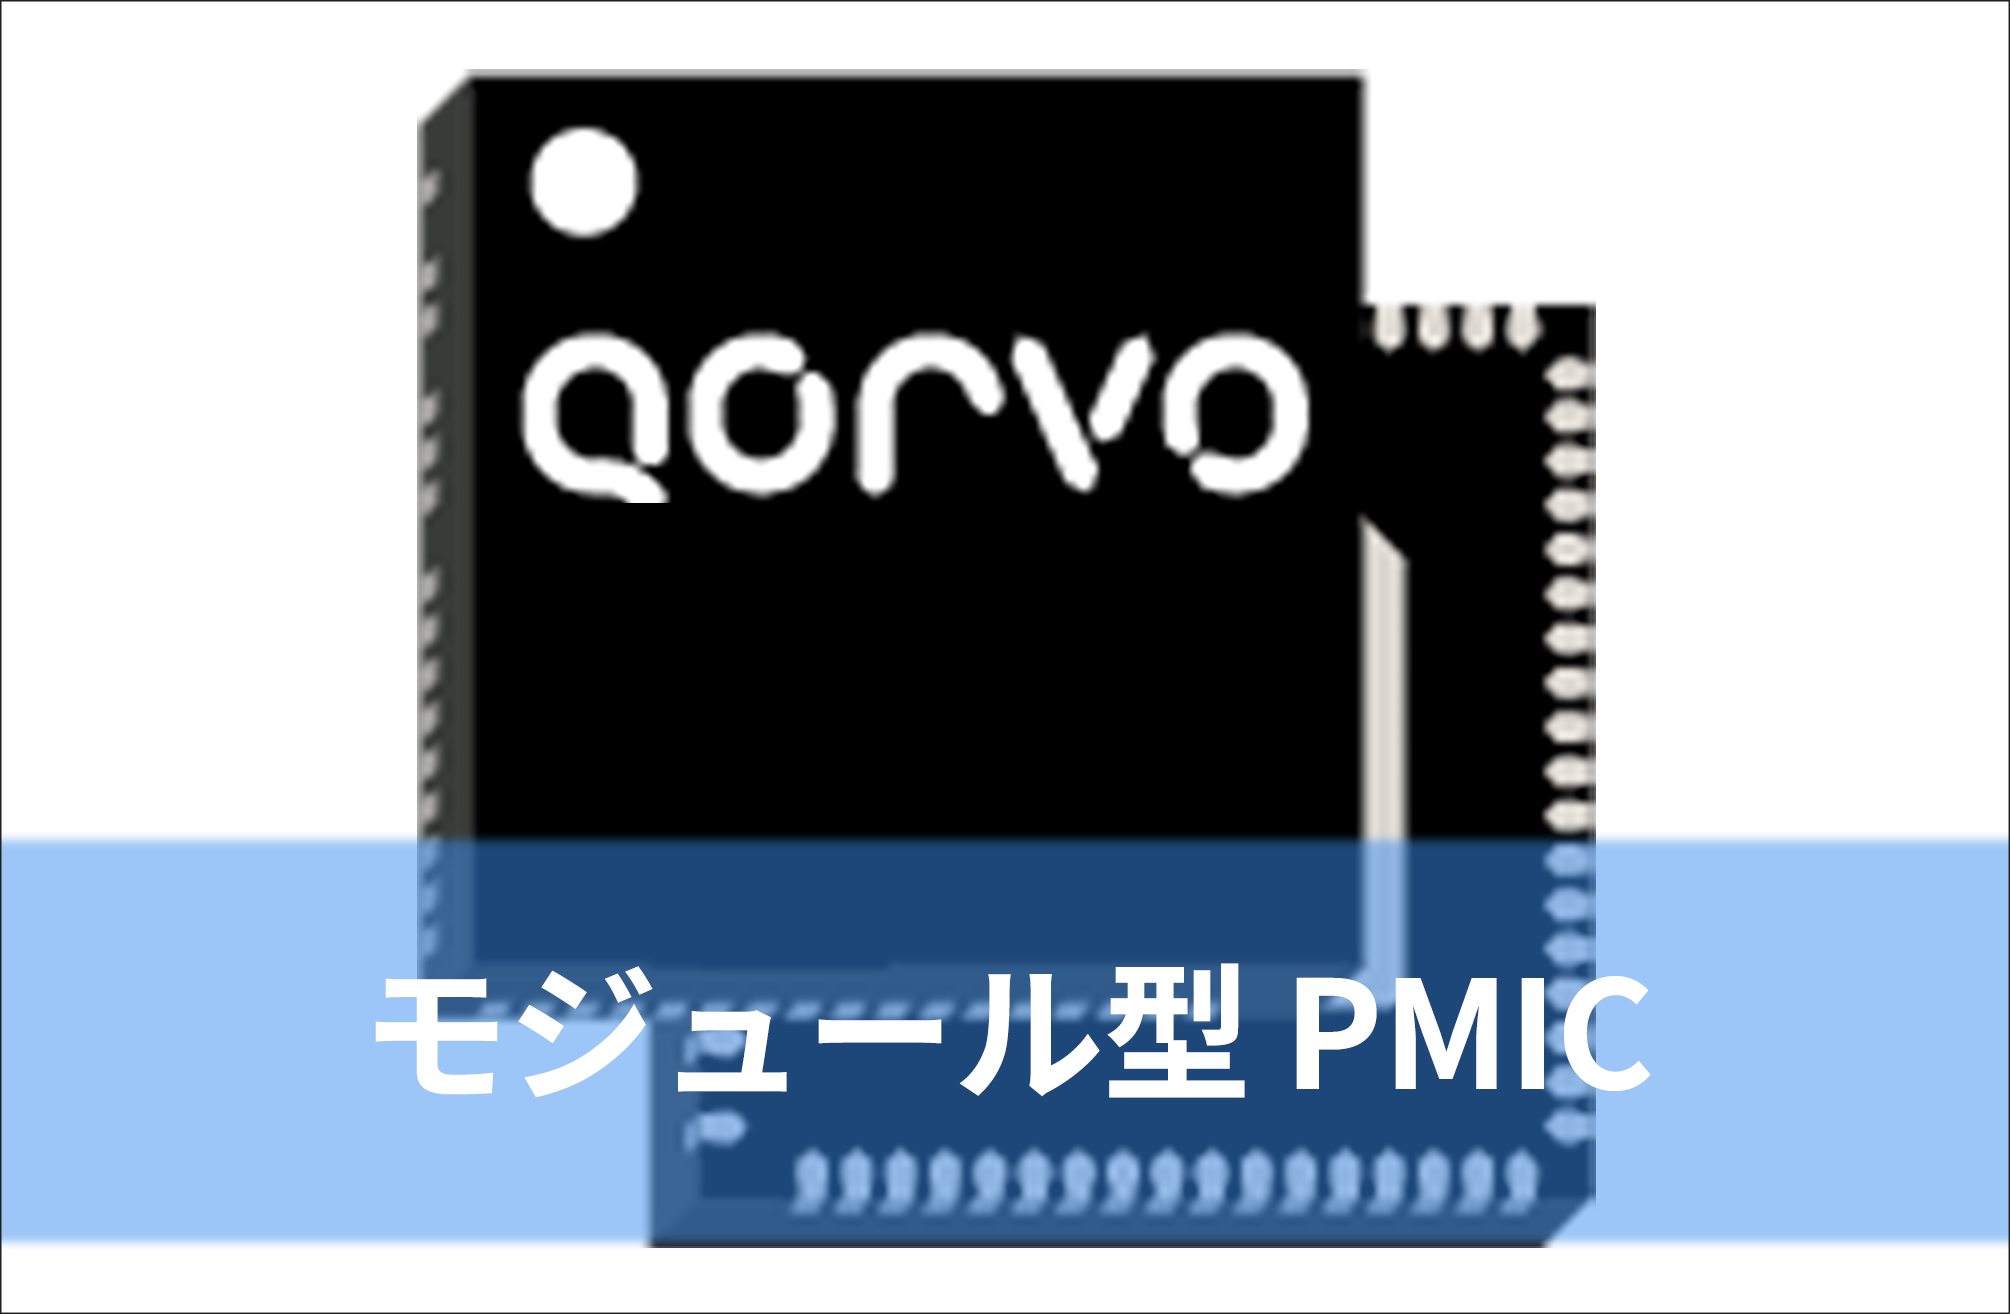 Modular Power Management IC (PMIC)